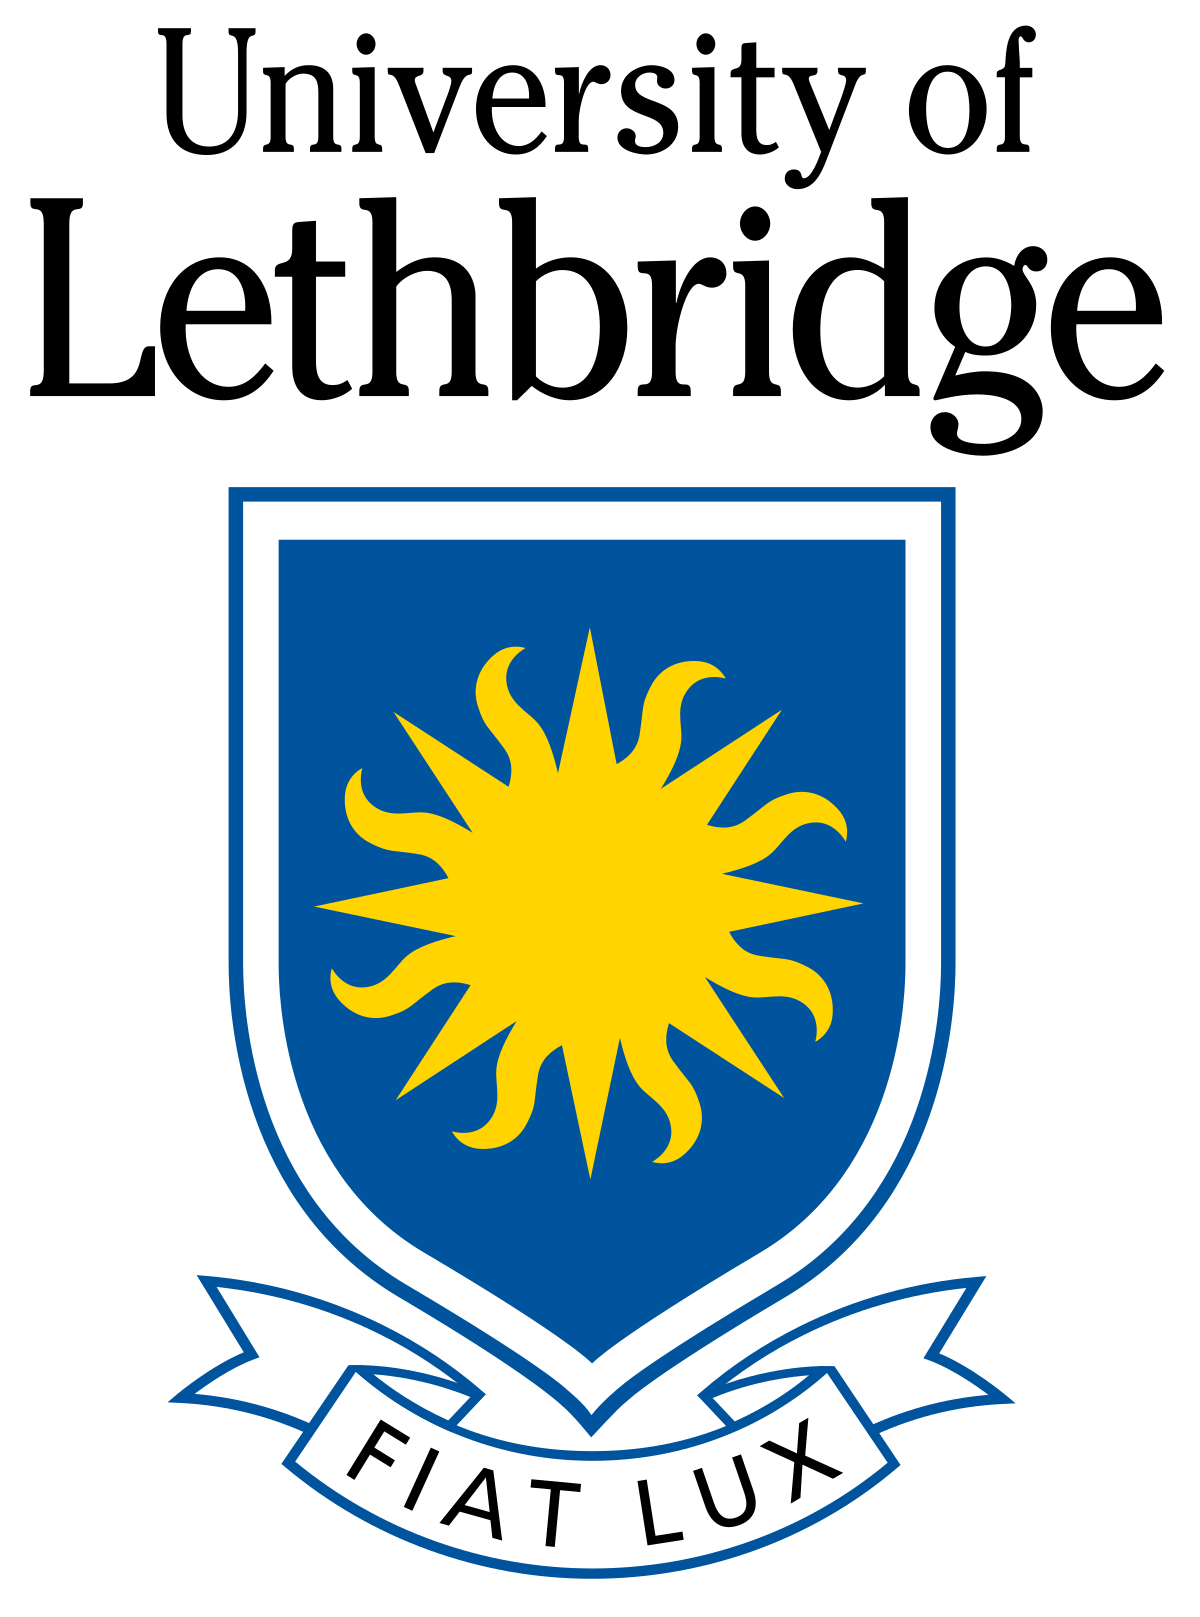 1200px-University of lethbridge logo.svg.png